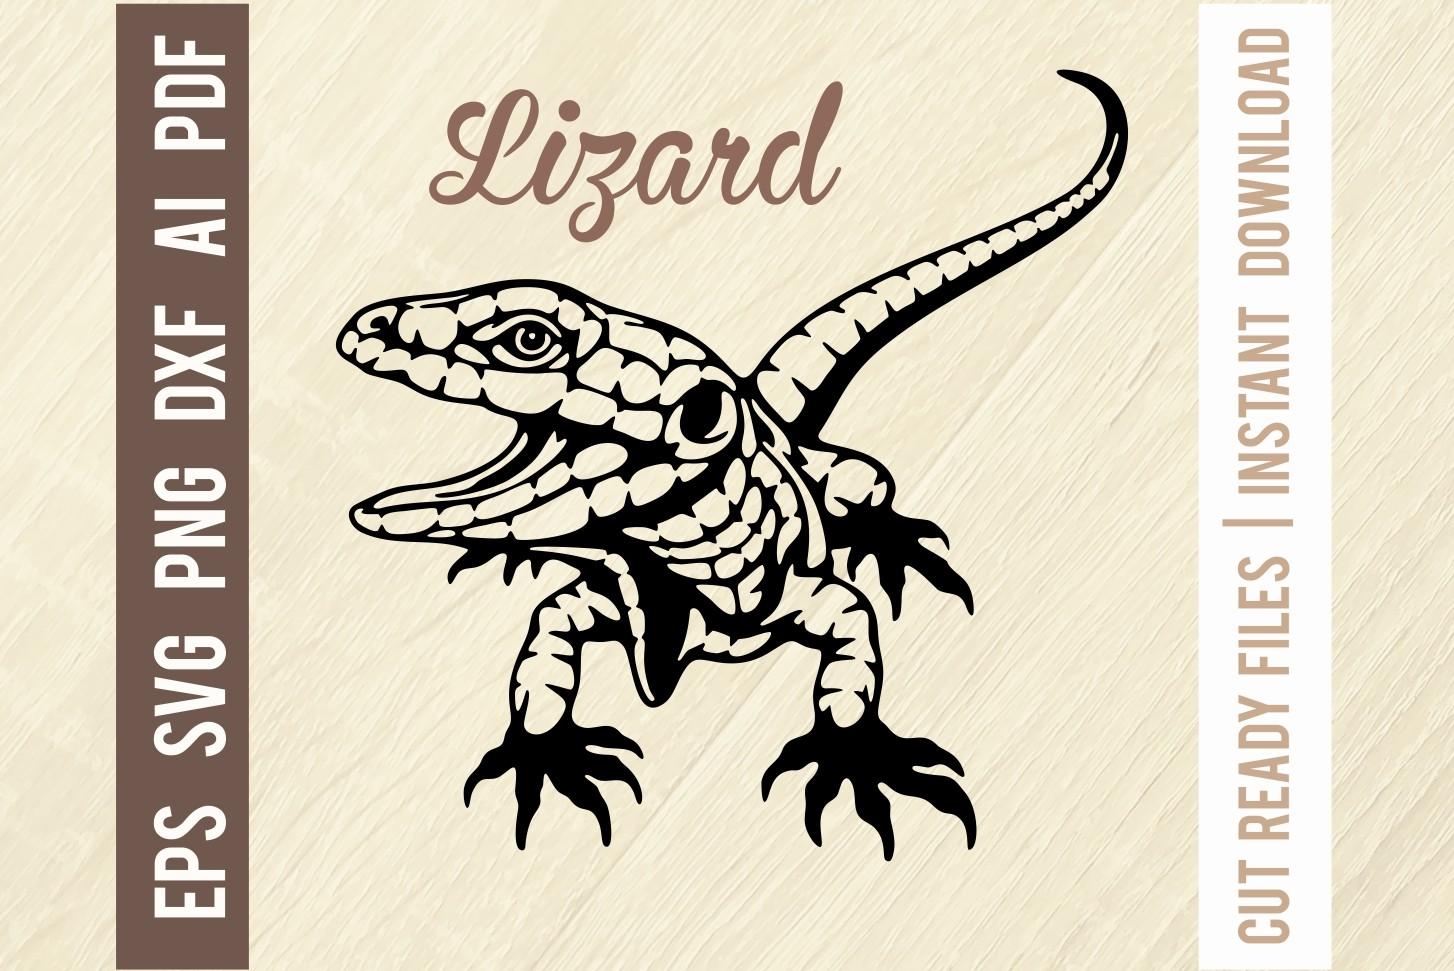 Lizard Reptiles